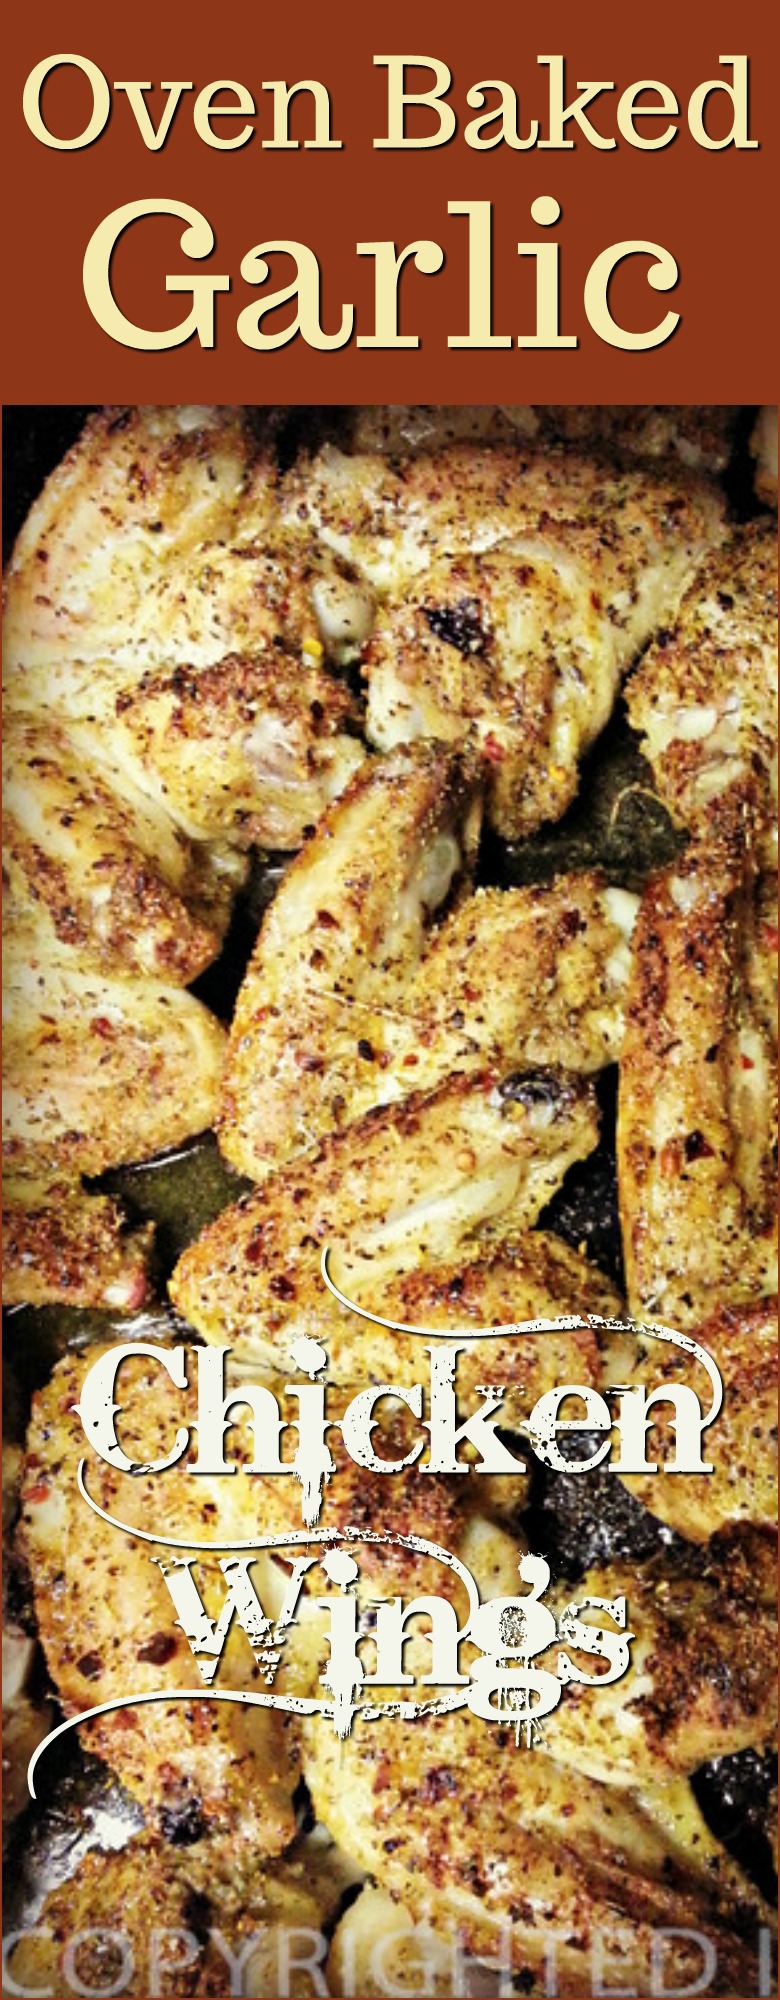 Best oven baked garlic chicken wings recipe!